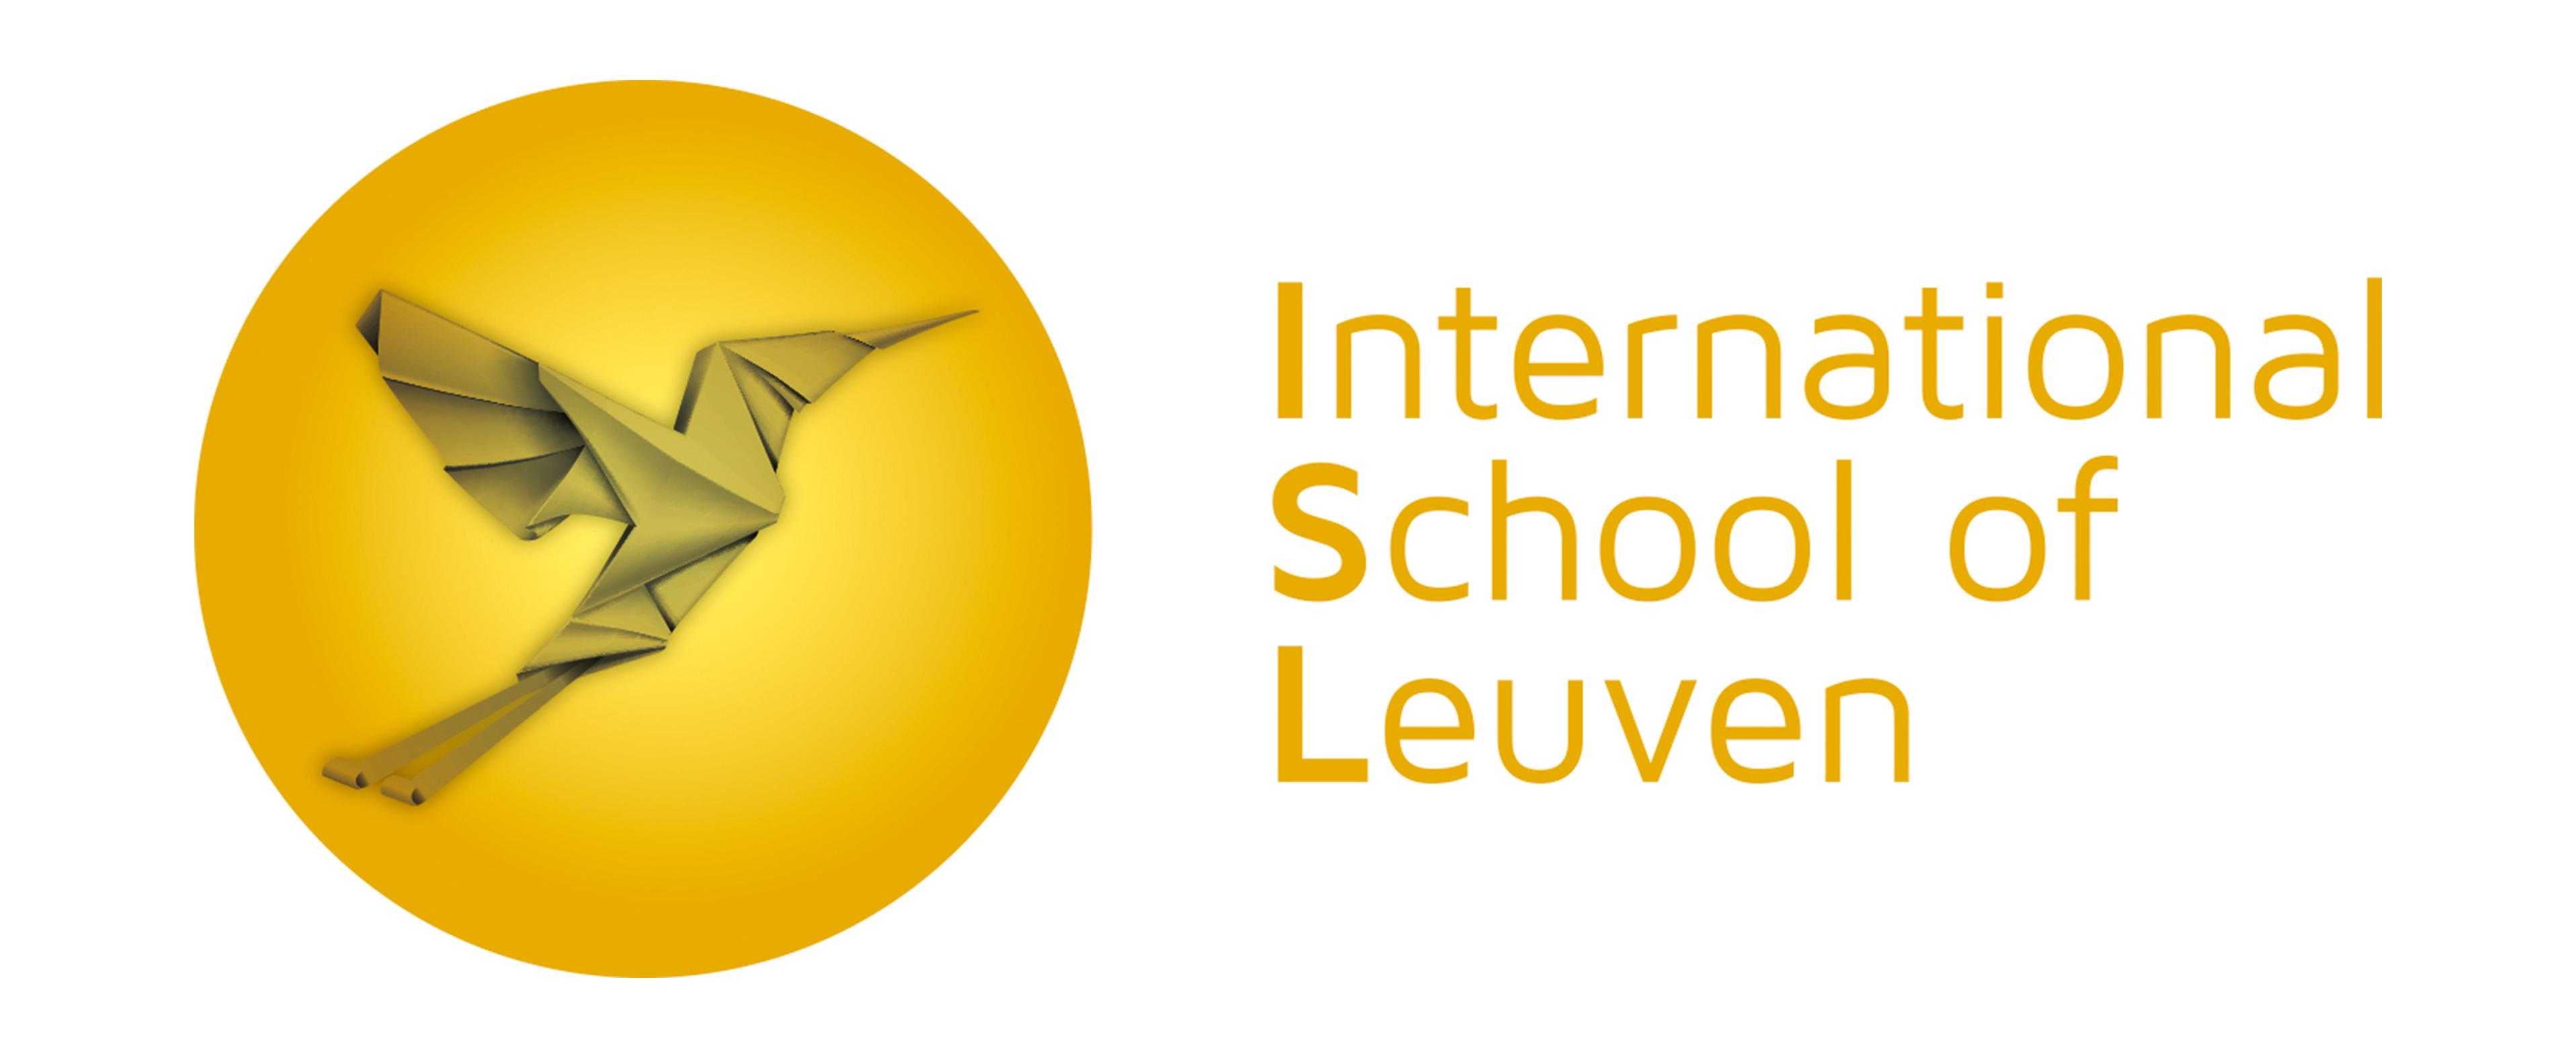 International School of Leuven